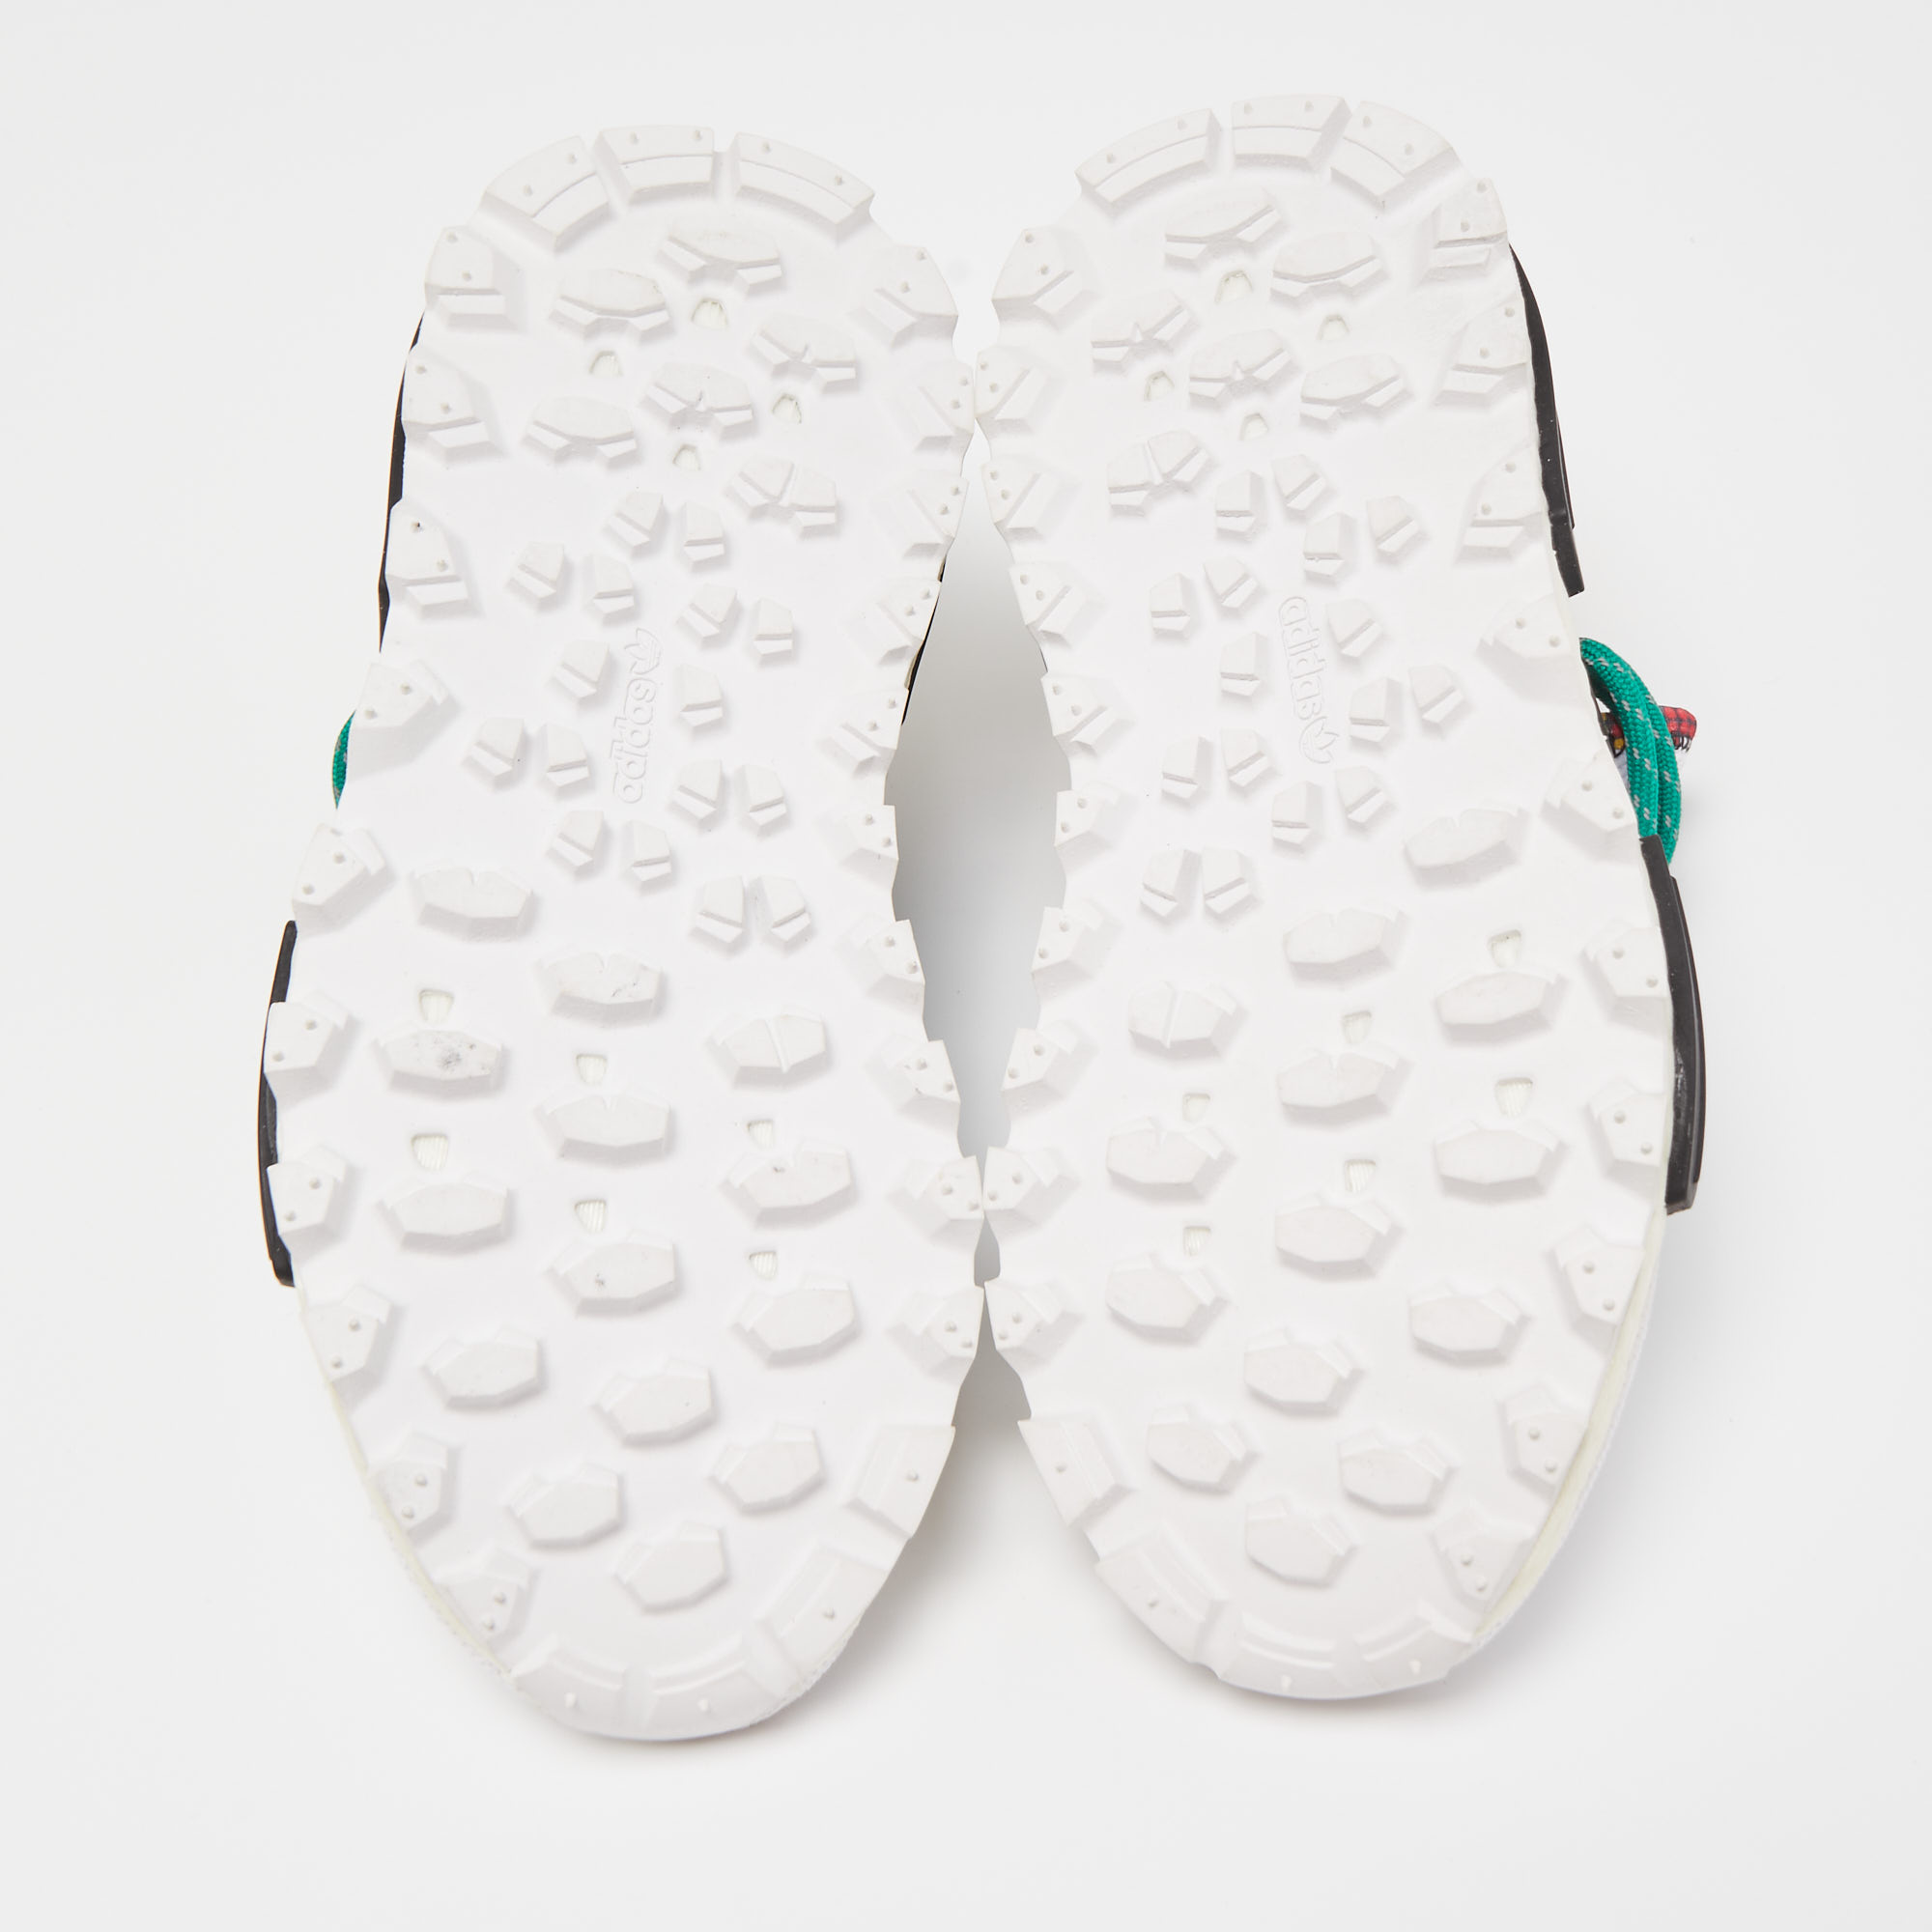 Pharrell Williams X Adidas White Fabric Human Body NMD Sneakers Size 37 1/3